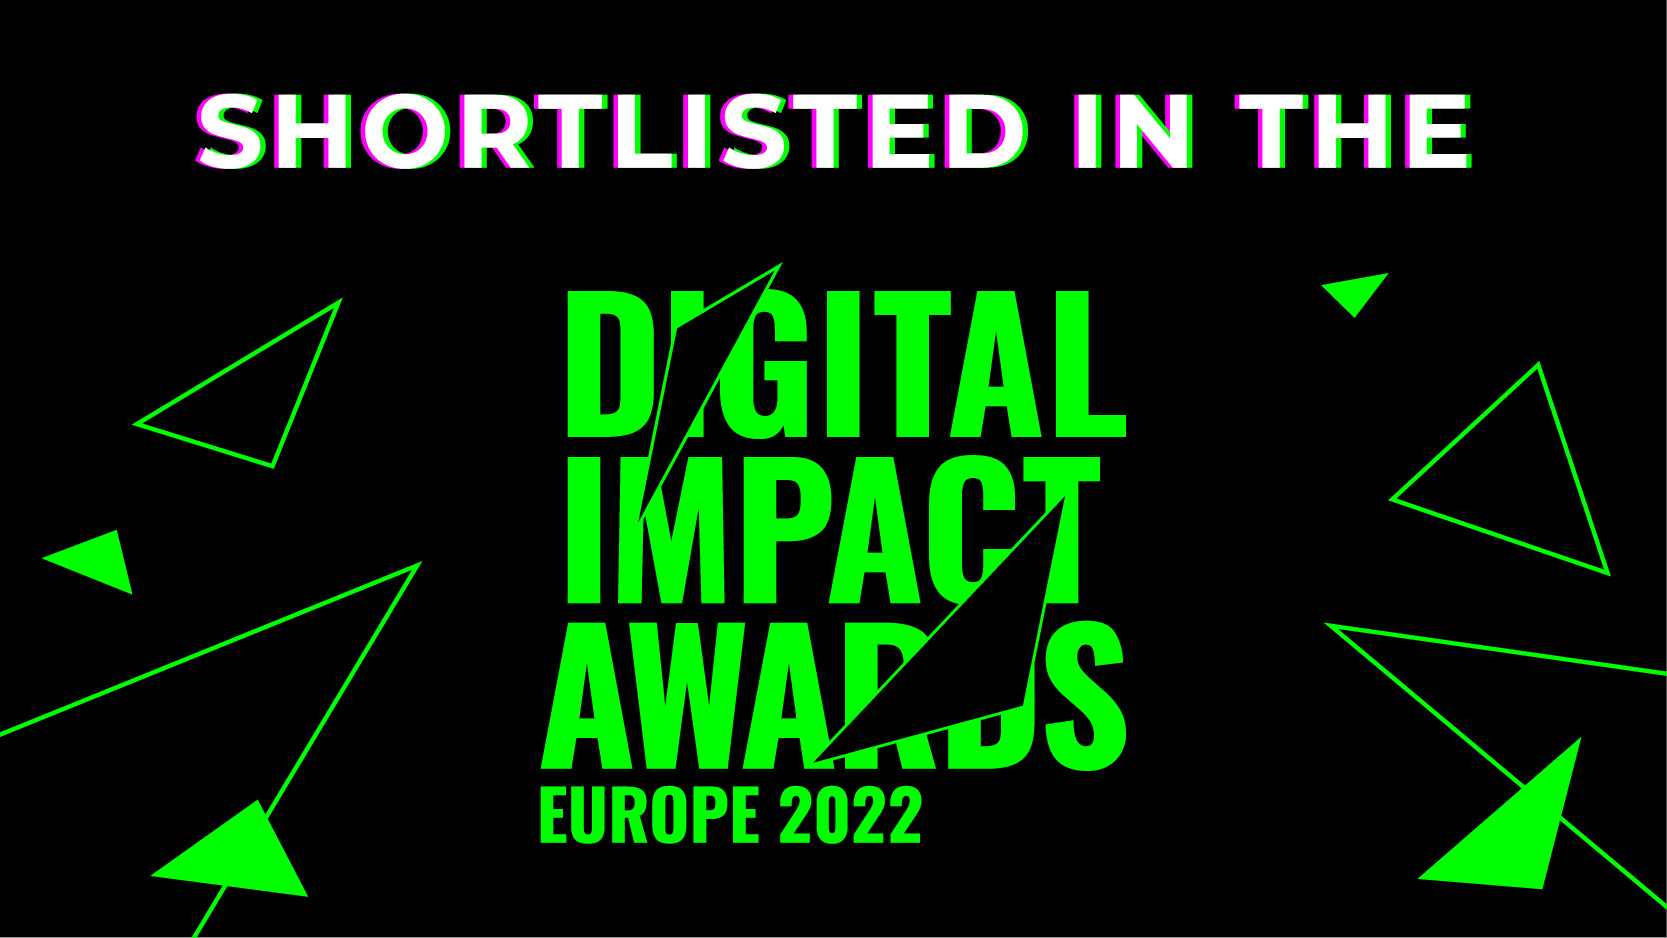 Digital Impact Awards Europe 2022 shortlisted logo in black/green